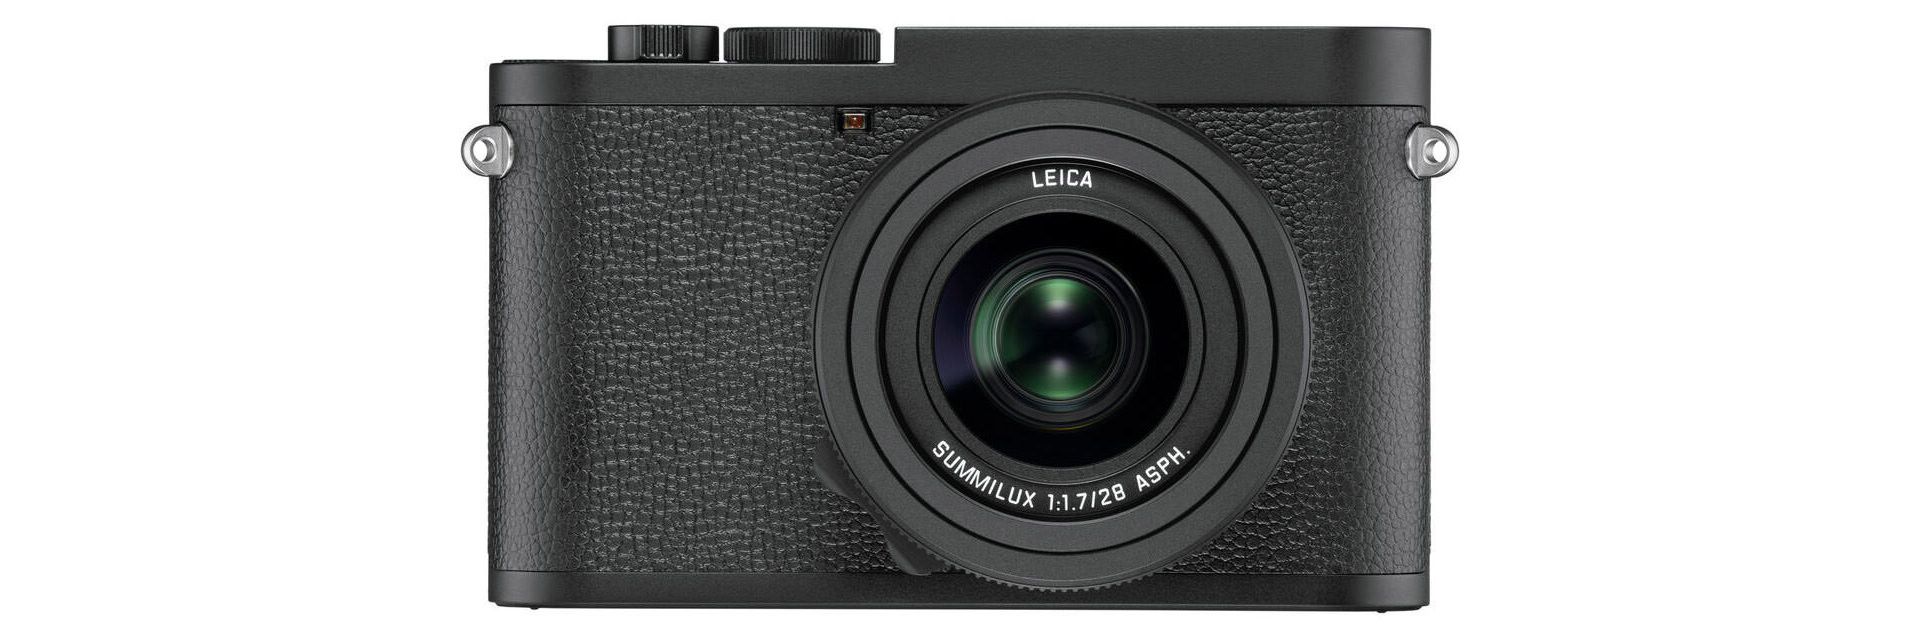 پنل جلویی لایکا کیو 2 مونوکروم / Leica Q2 Monochrom